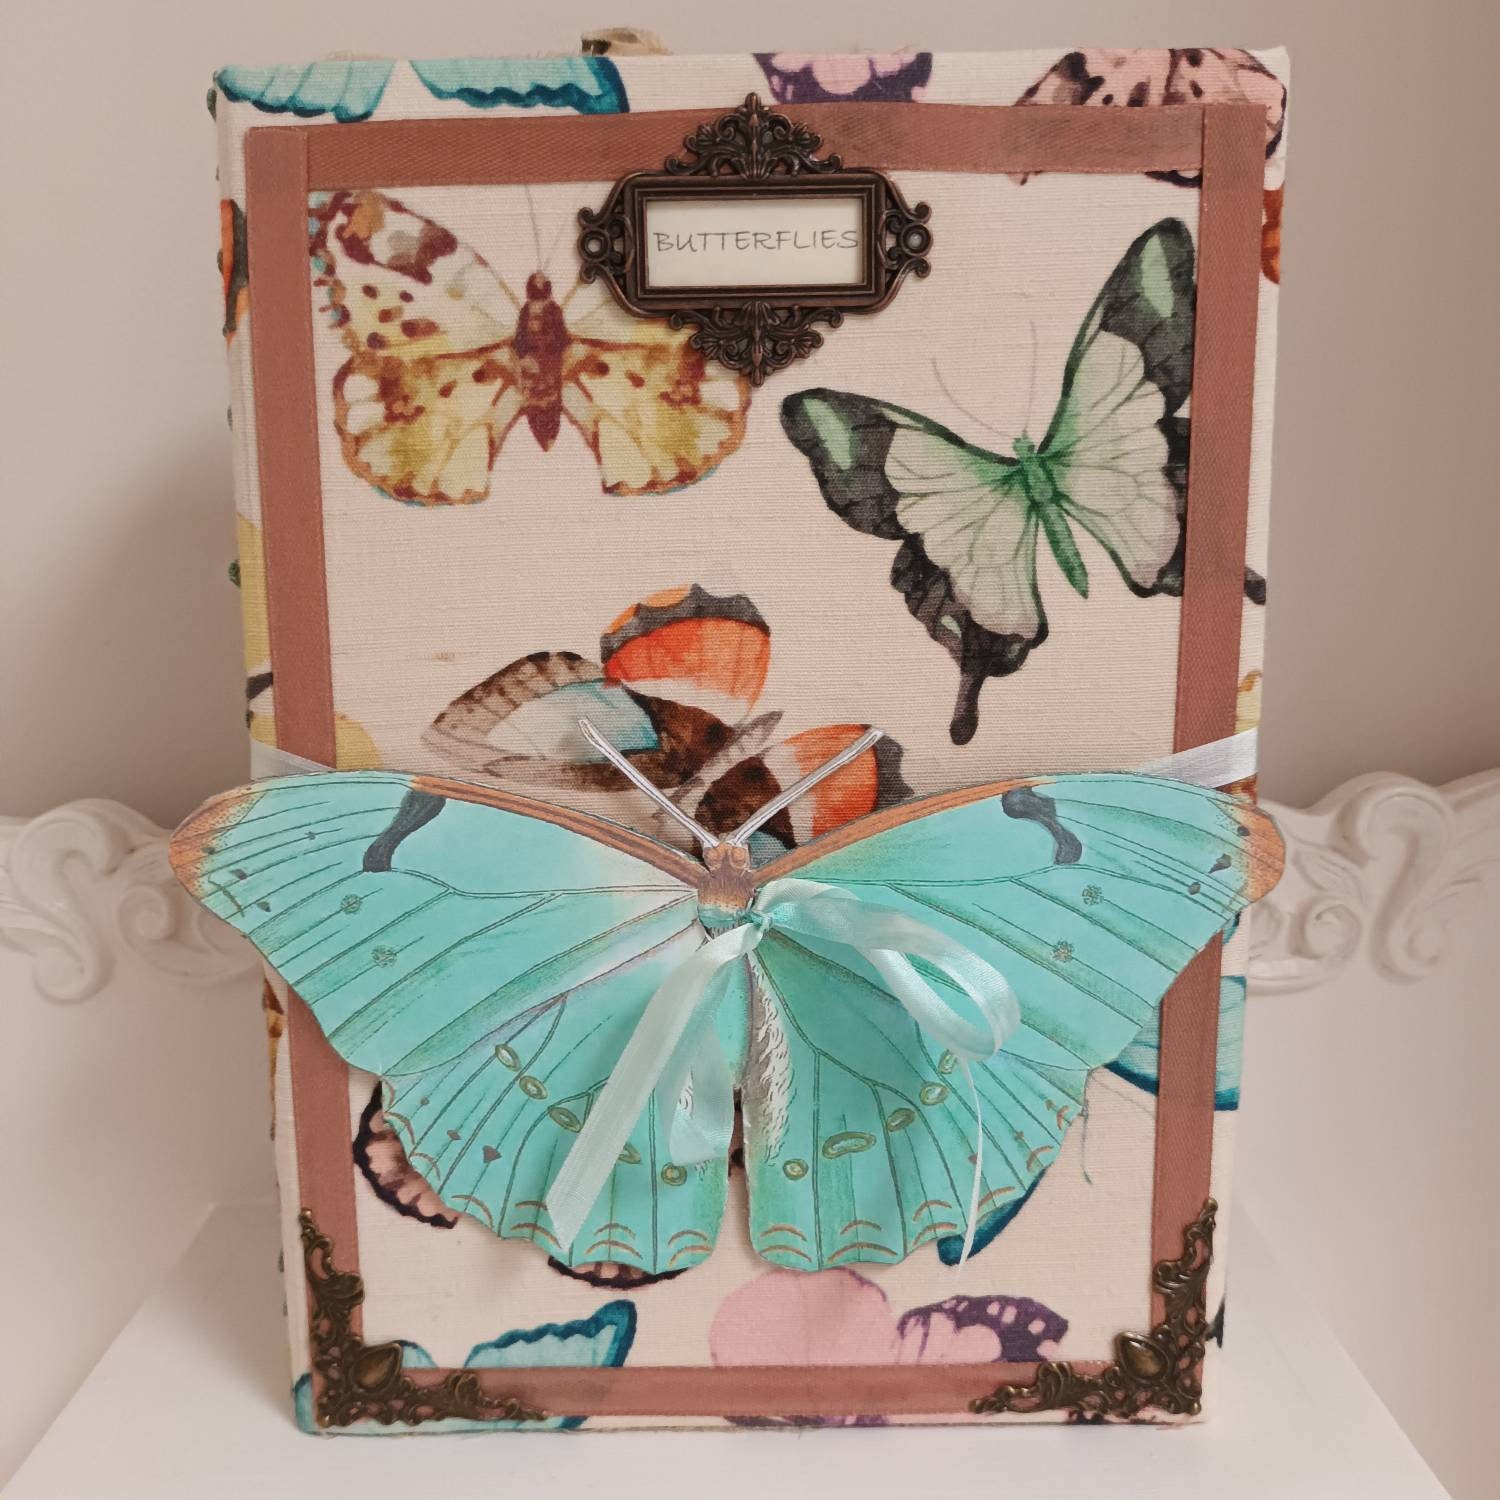 Shabby Vintage Butterflies Paper Pack, Digital Scrapbook Paper